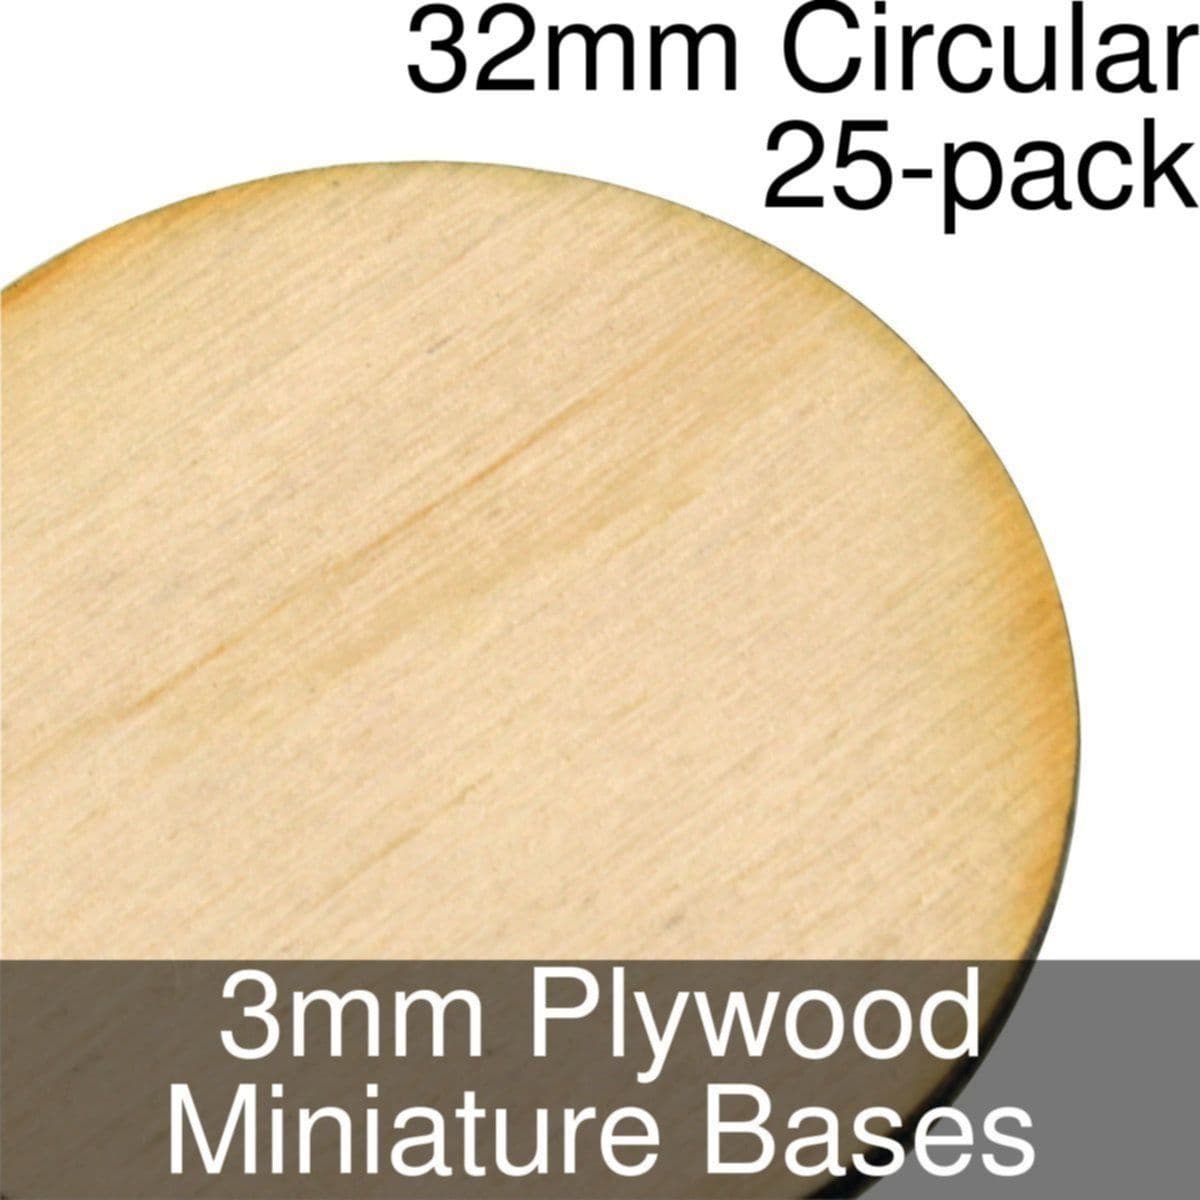 Miniature Bases, Circular, 32mm, 3mm Plywood (25)